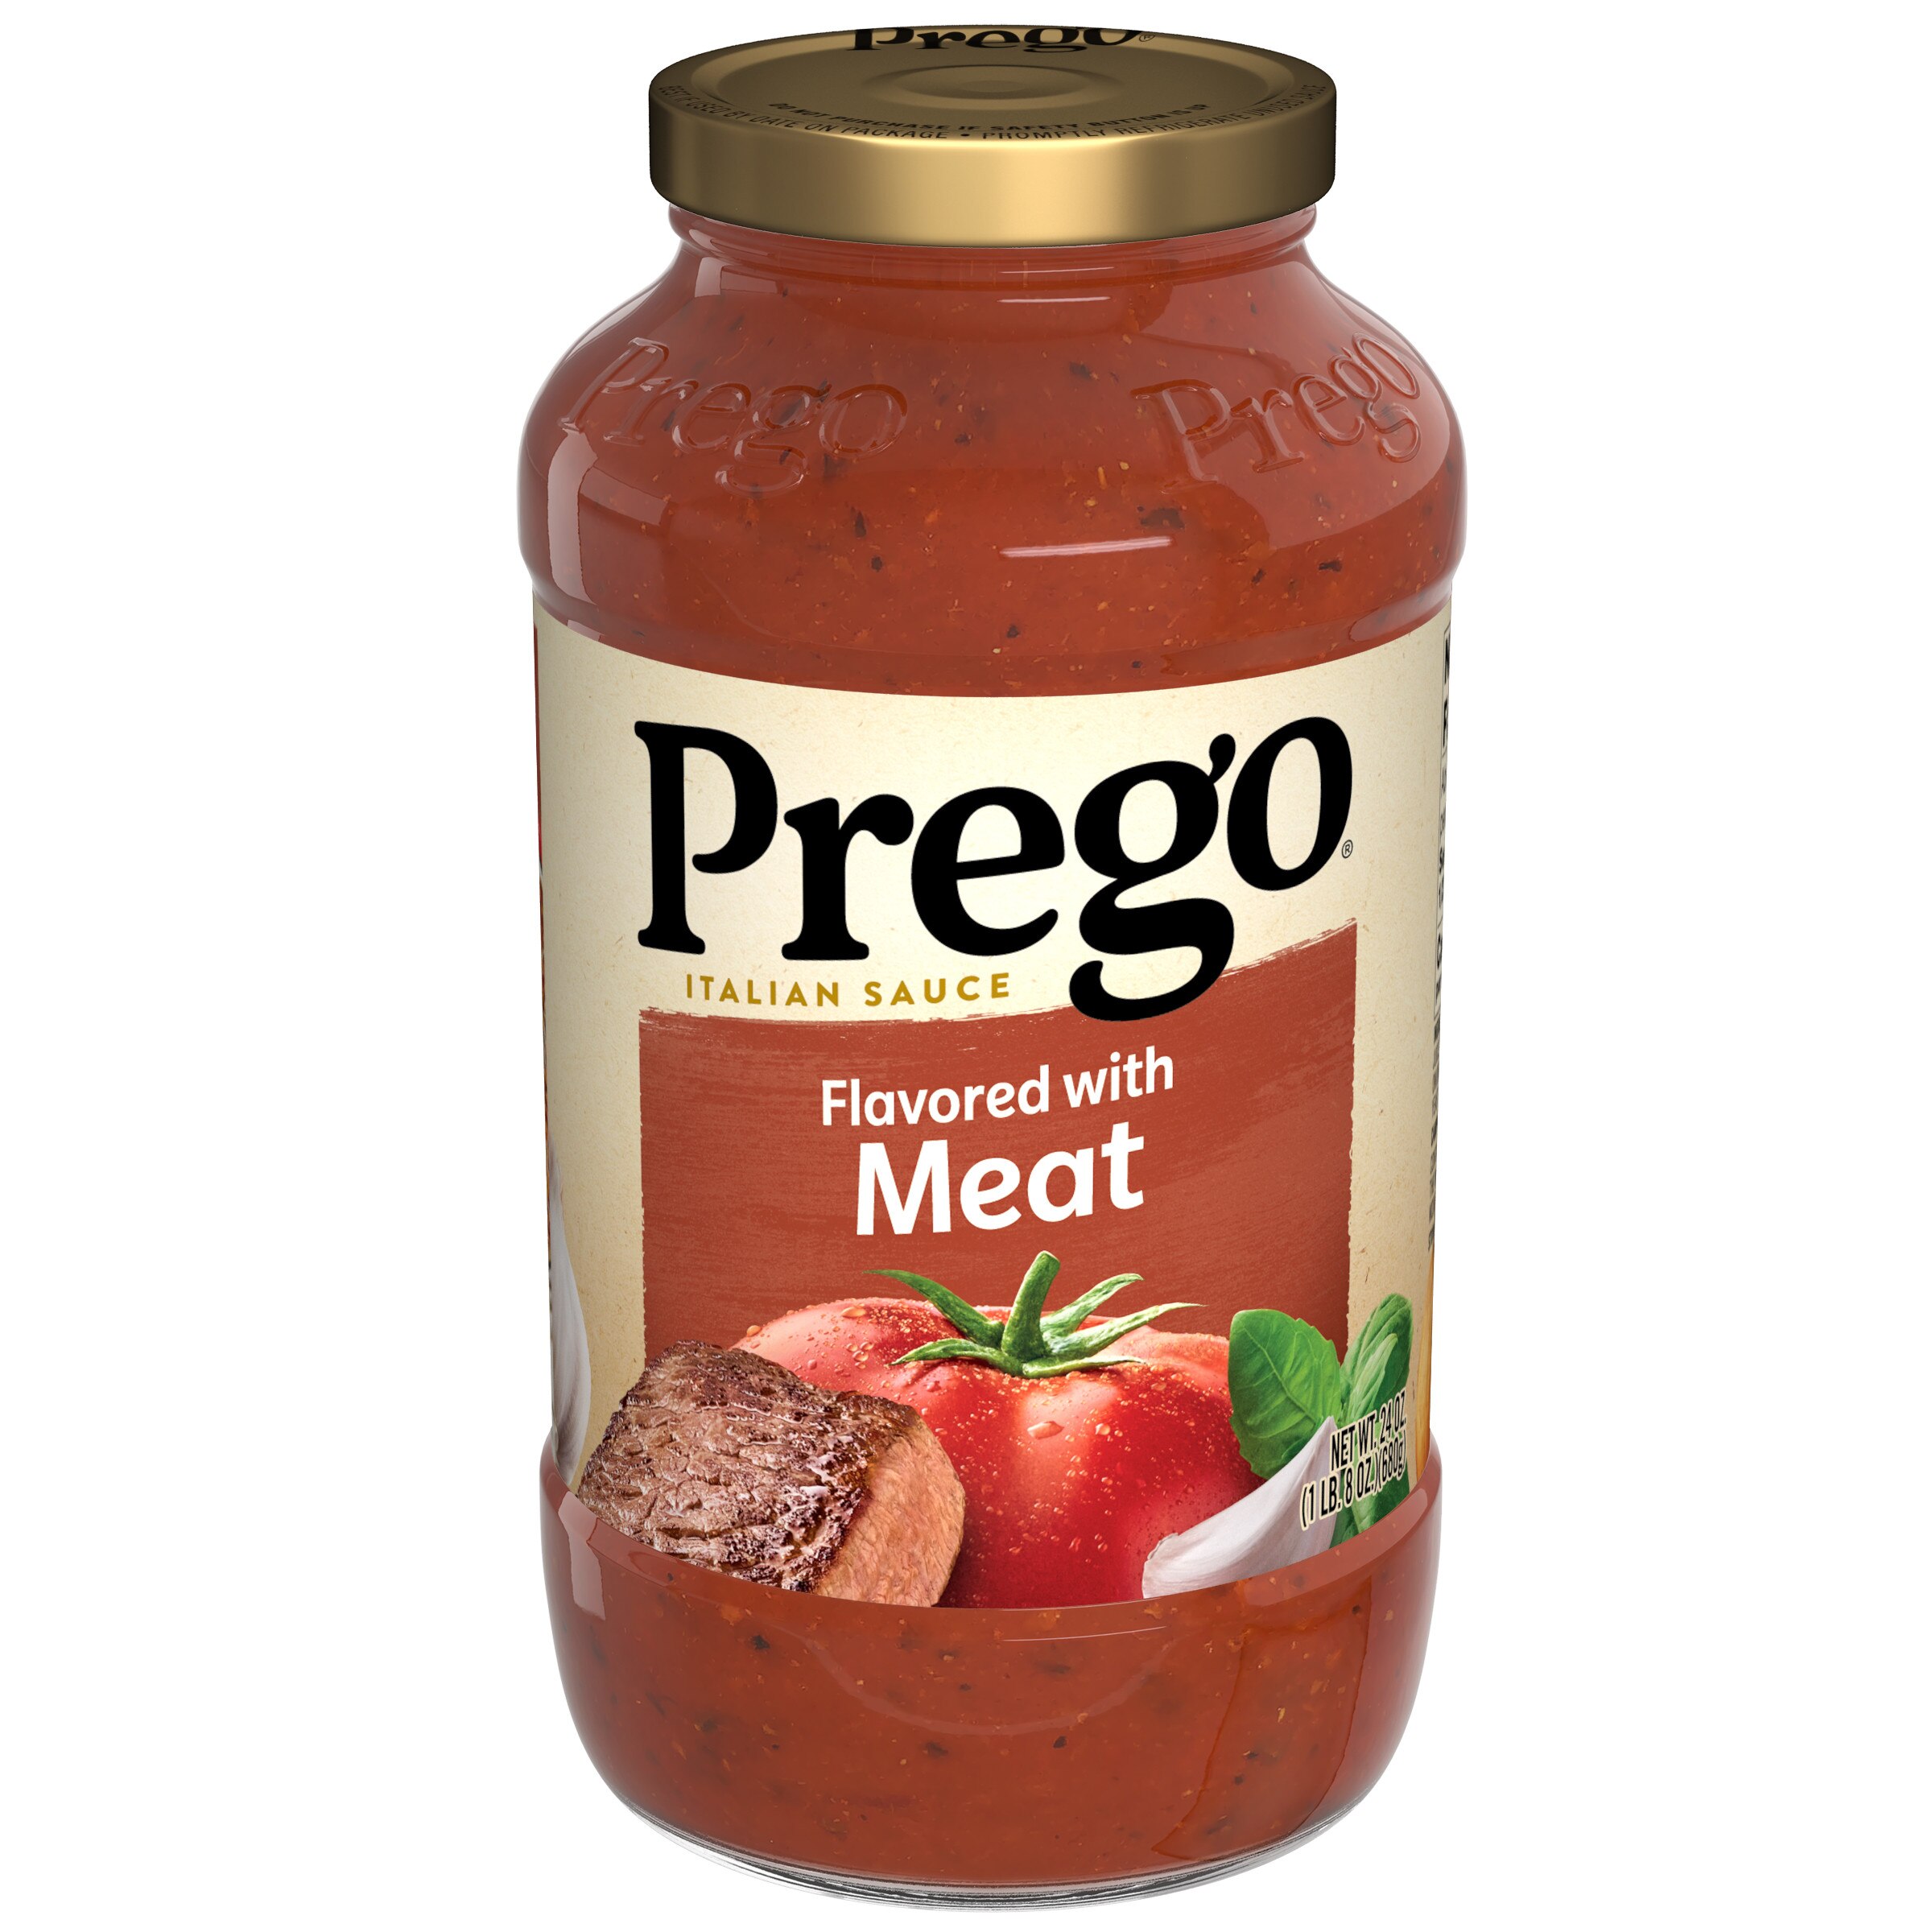 Prego Italian Tomato Pasta Sauce Flavored With Meat, Jar, 24 oz